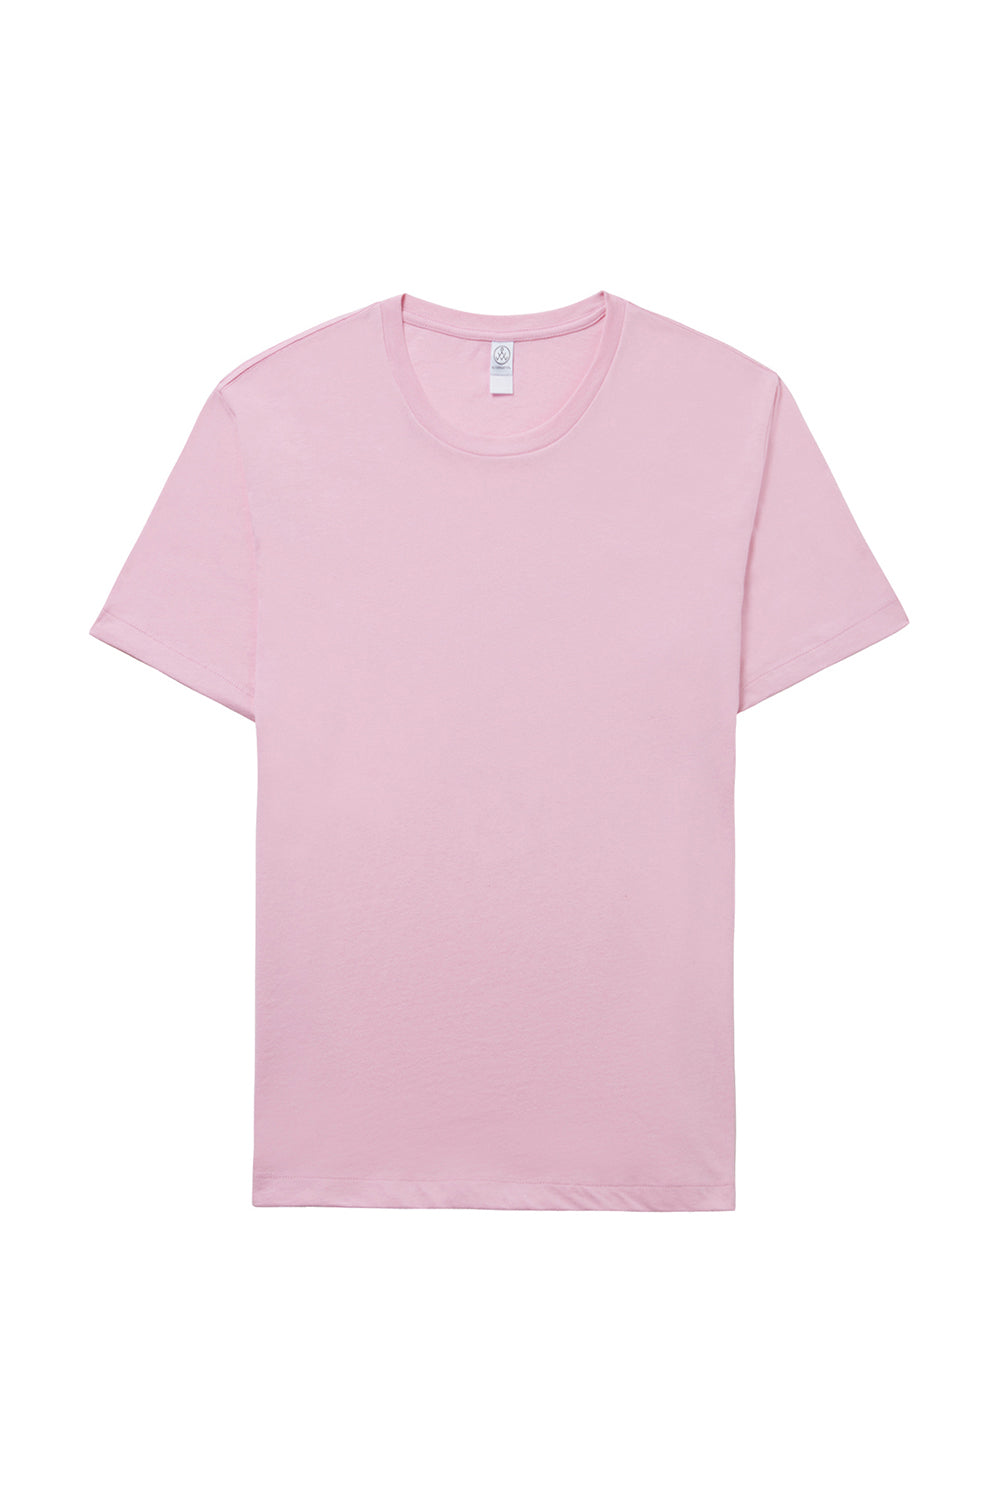 Alternative AA1070/1070 Mens Go To Jersey Short Sleeve Crewneck T-Shirt Highlighter Pink Flat Front